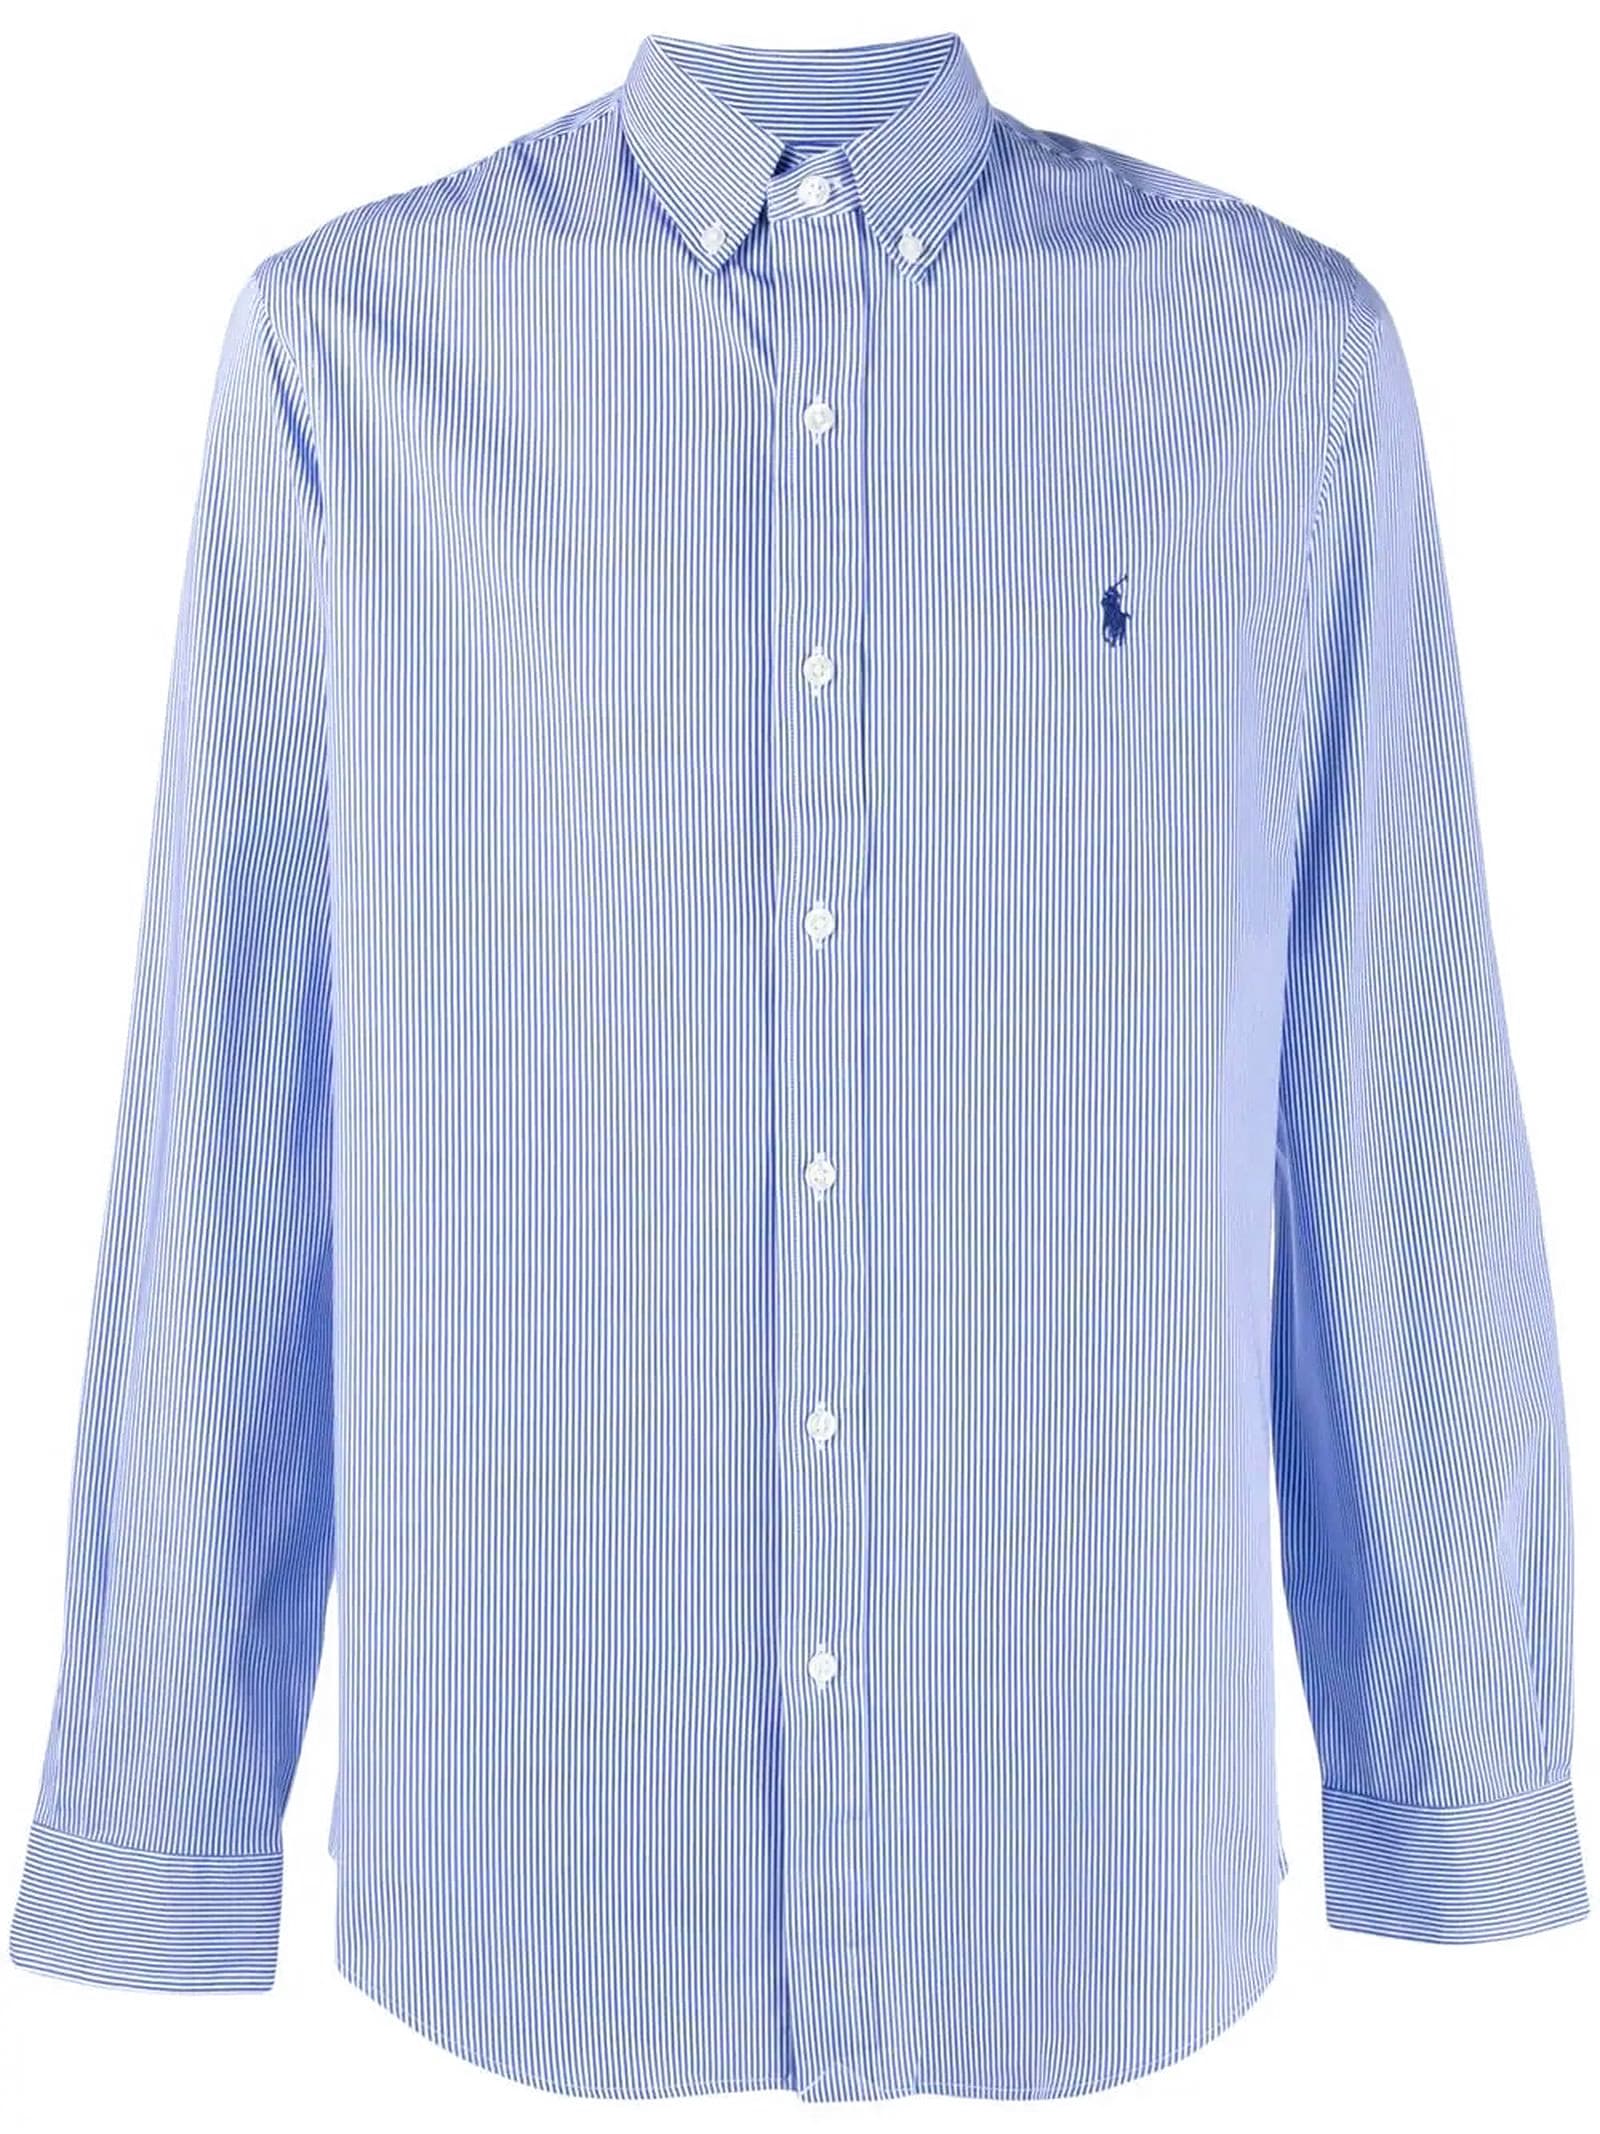 Ralph Lauren White And Blue Cotton Shirt